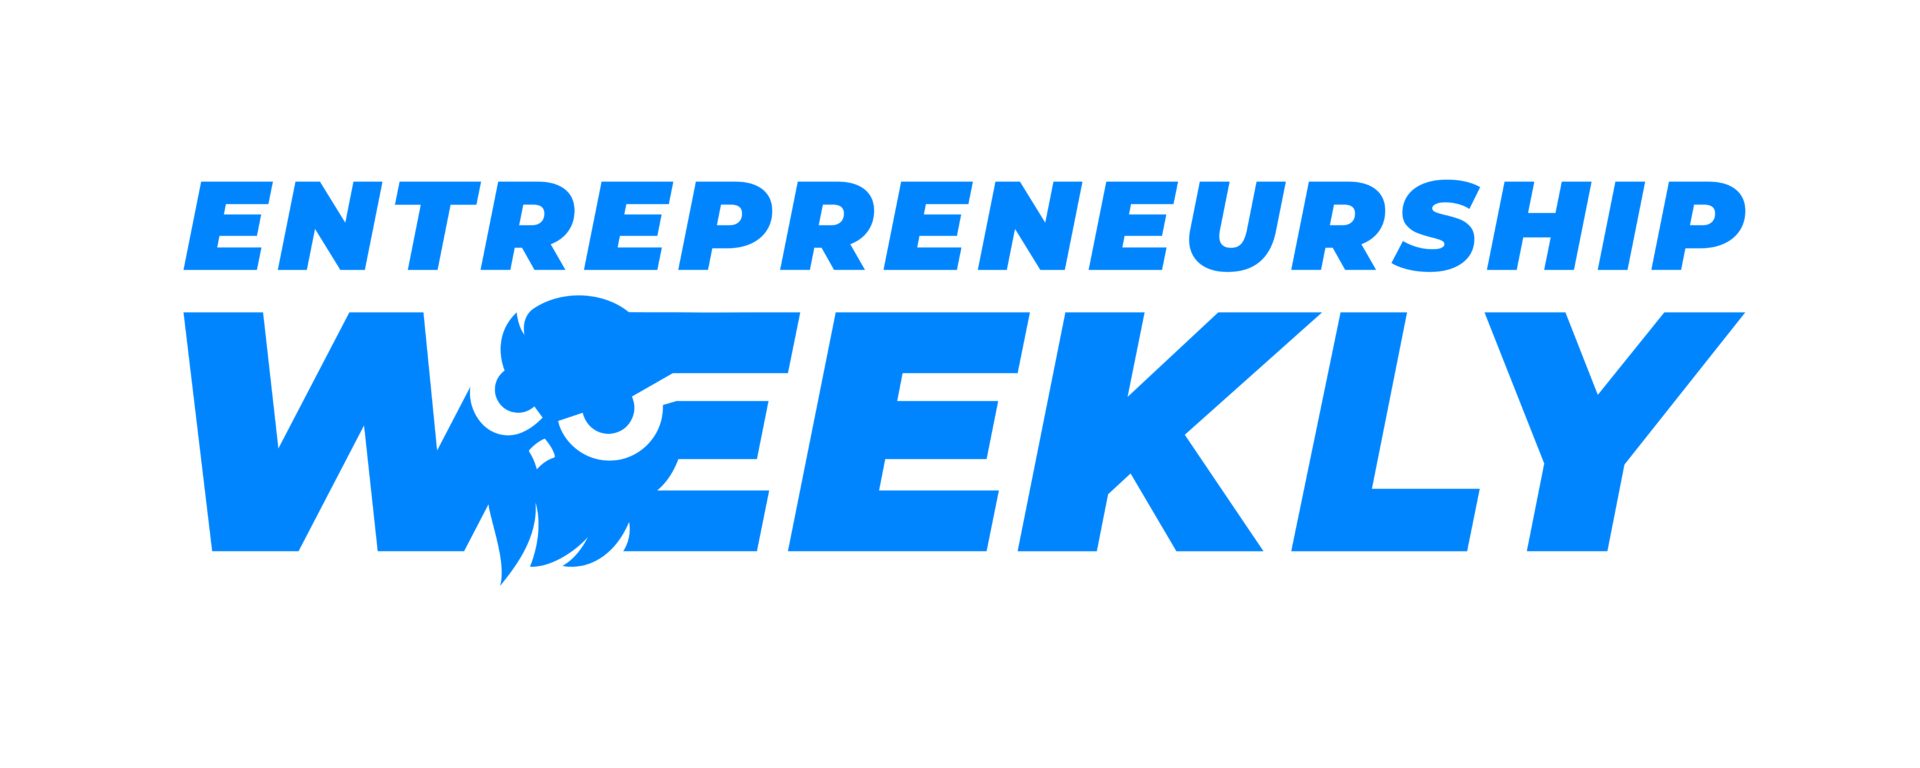 Entrepreneurship Weekly